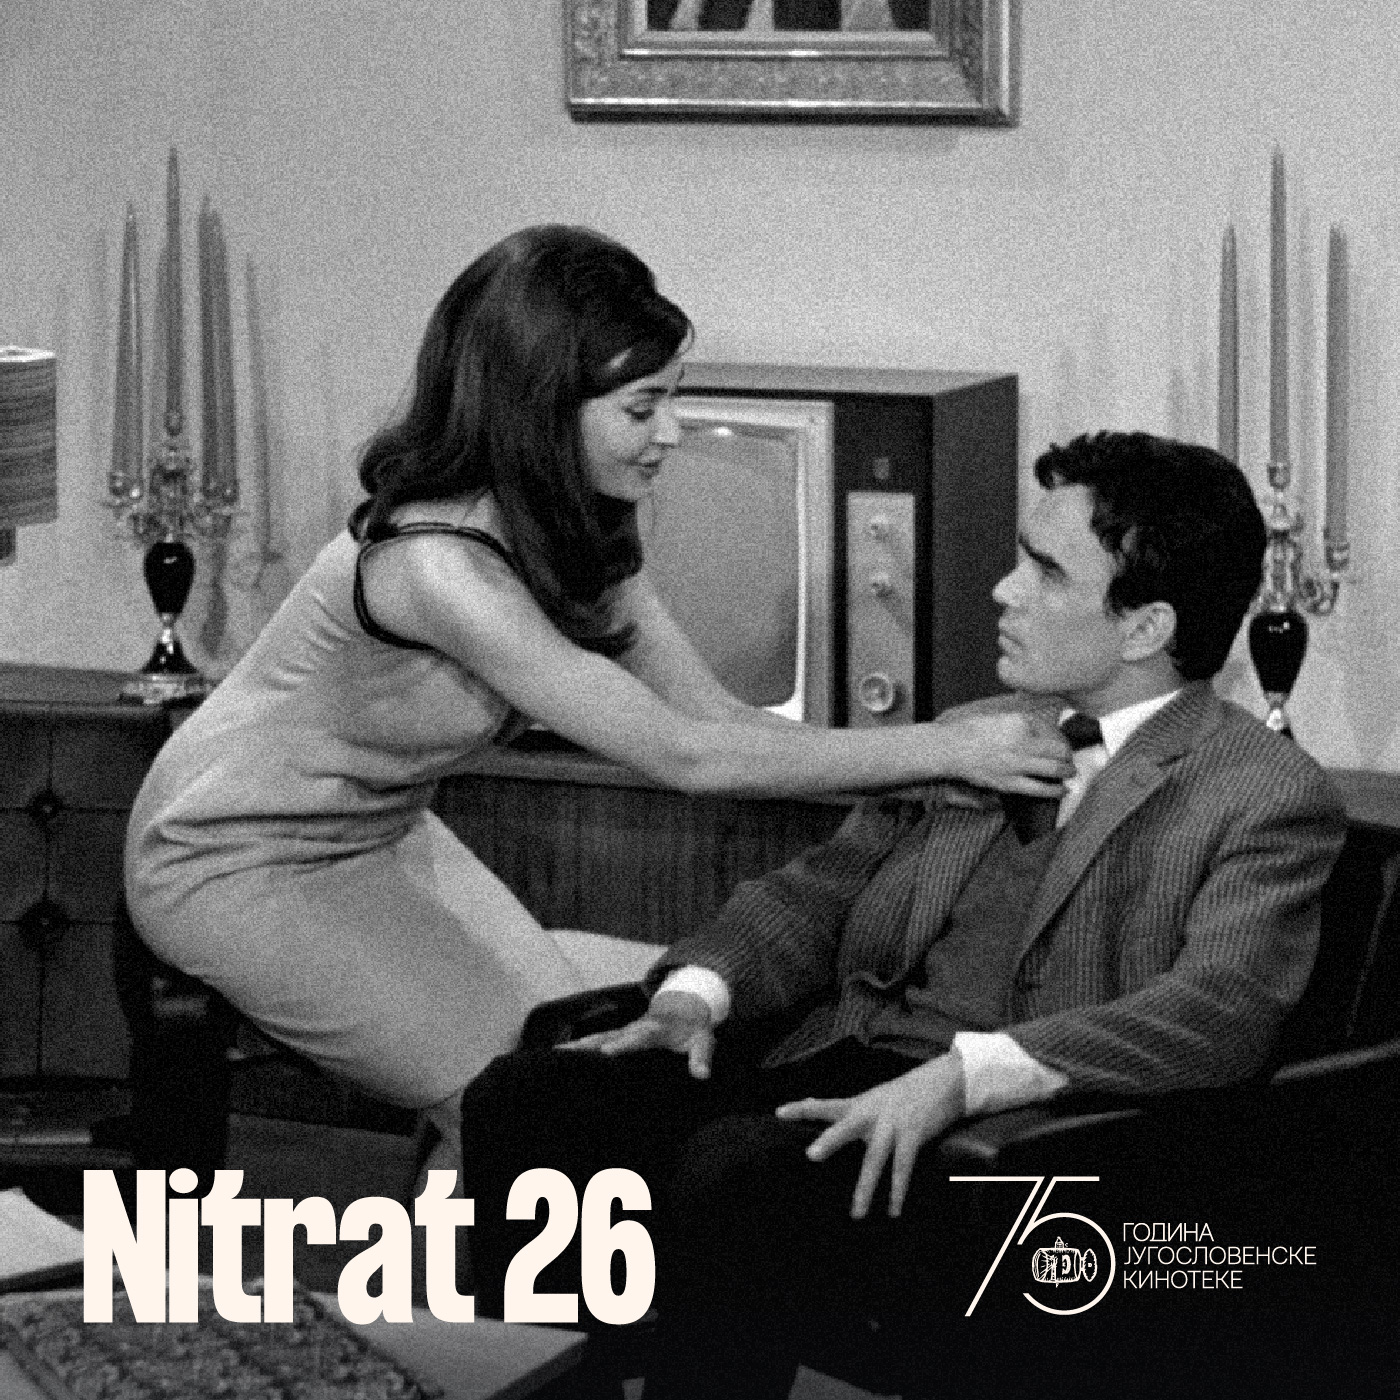 NITRAT 26, najava programa, web ig post-23